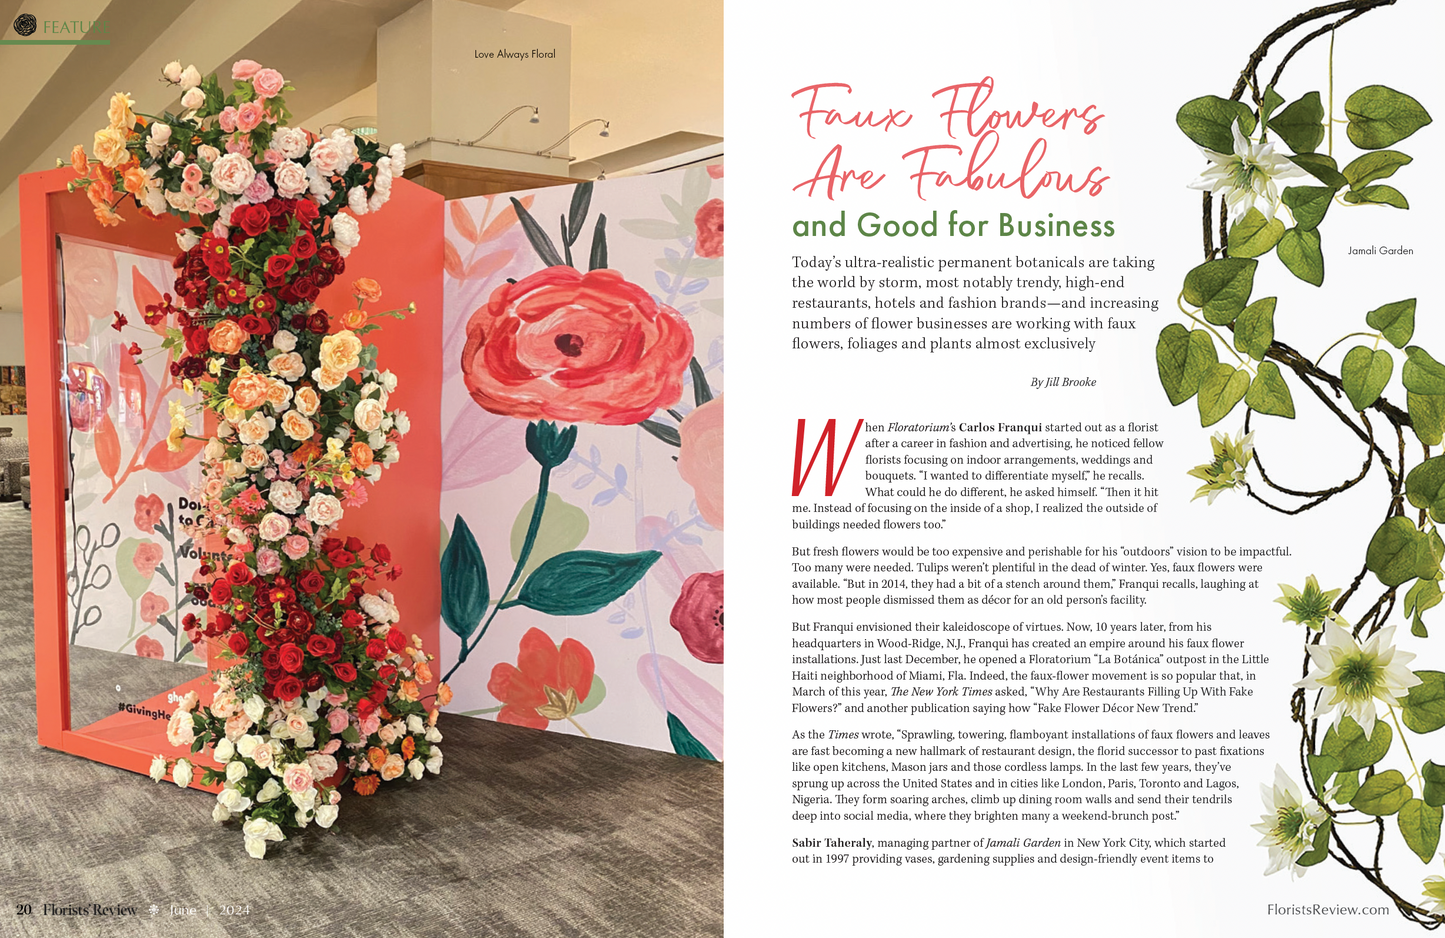 June 2024 - Florists' Review DIGITAL Edition